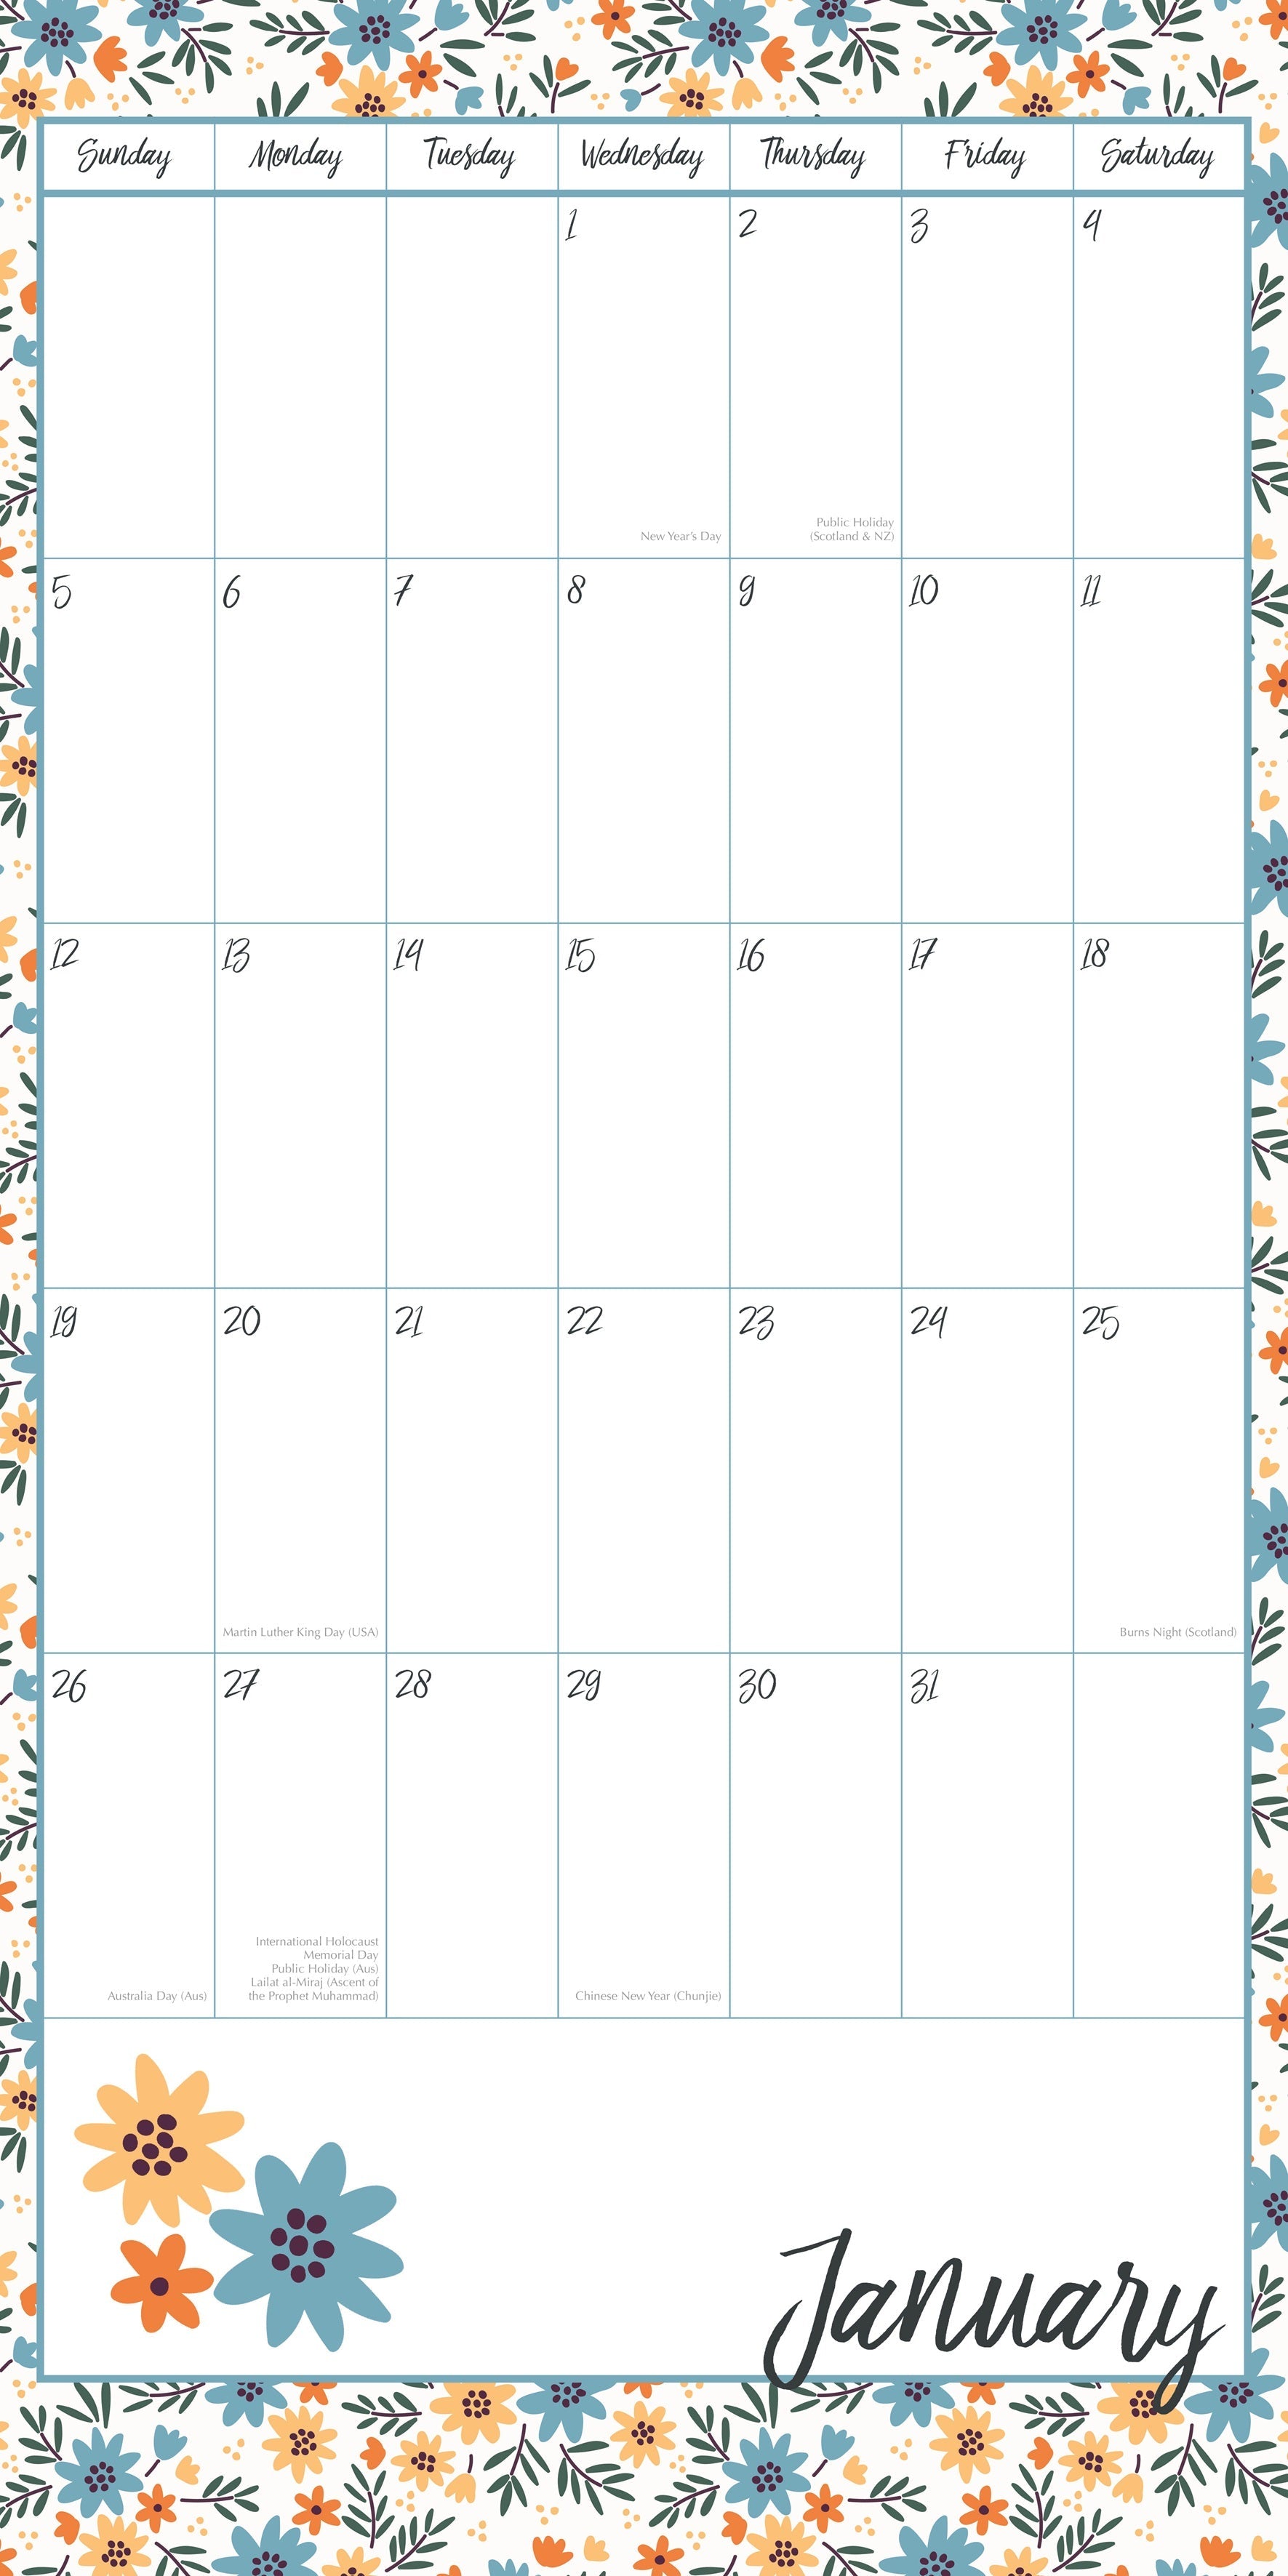 2025 Mum's Organiser - Square Wall Calendar